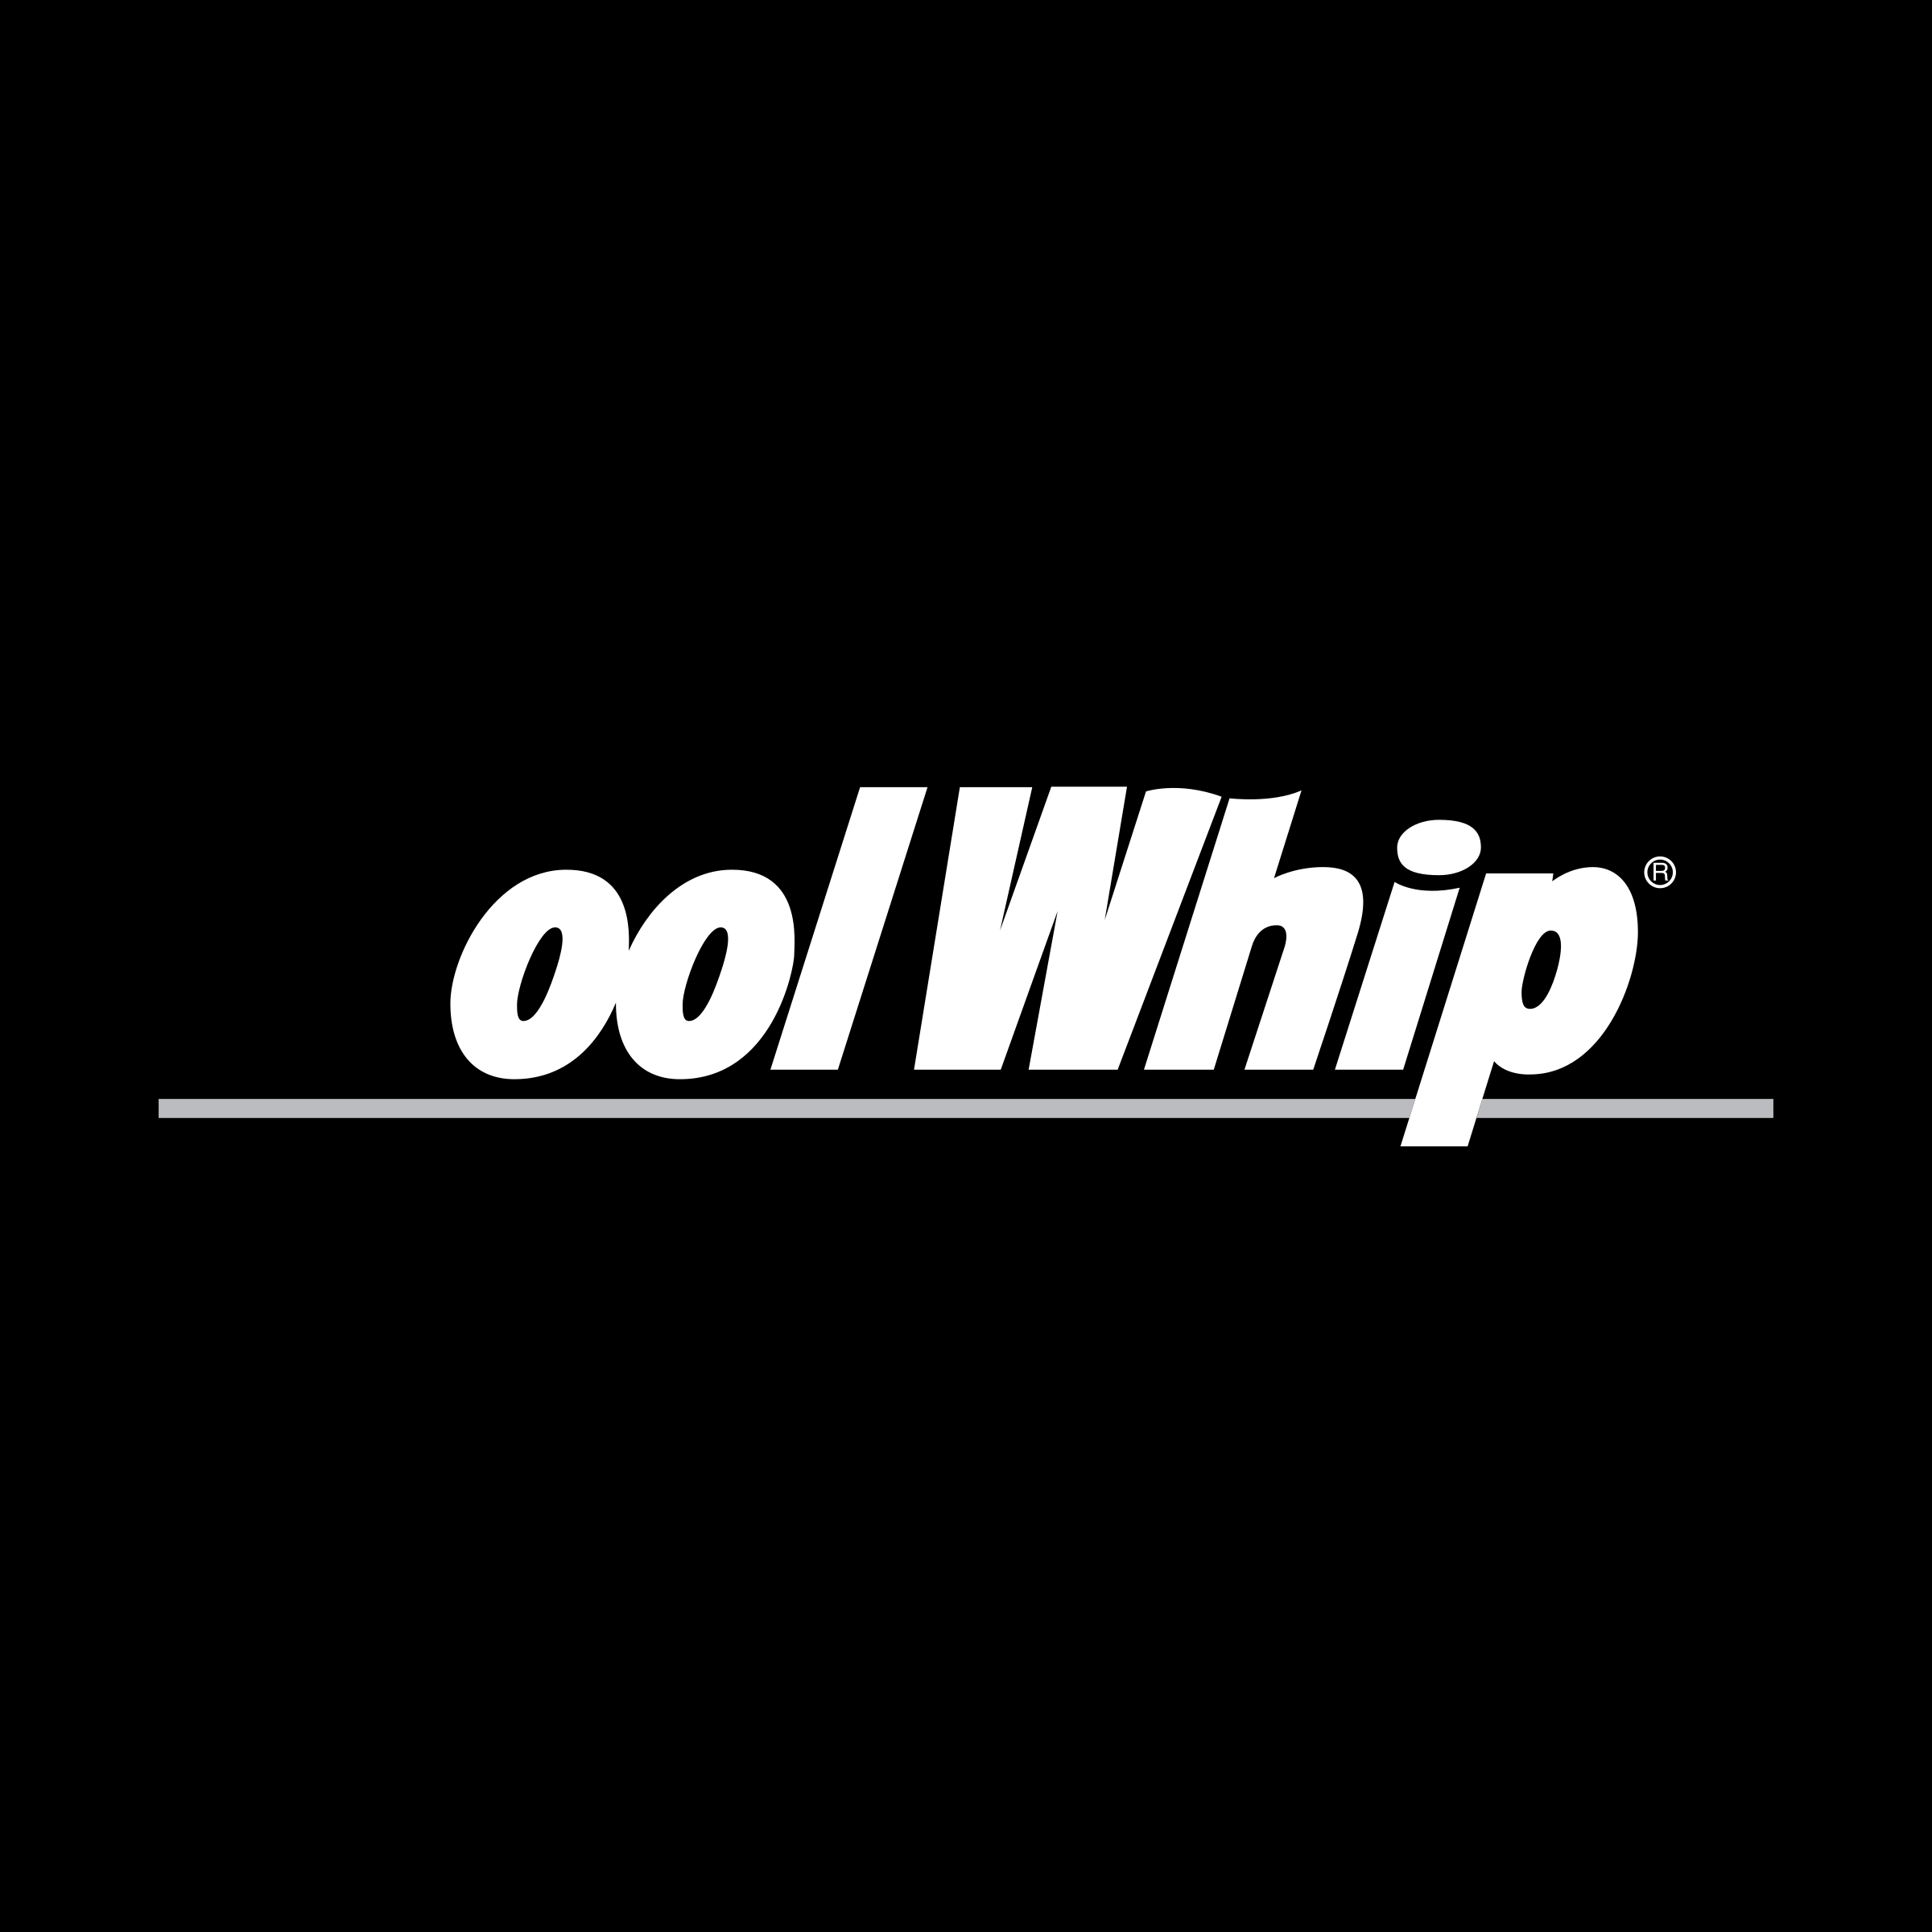 Cool Transparent Logo - Cool Whip Logo PNG Transparent & SVG Vector - Freebie Supply